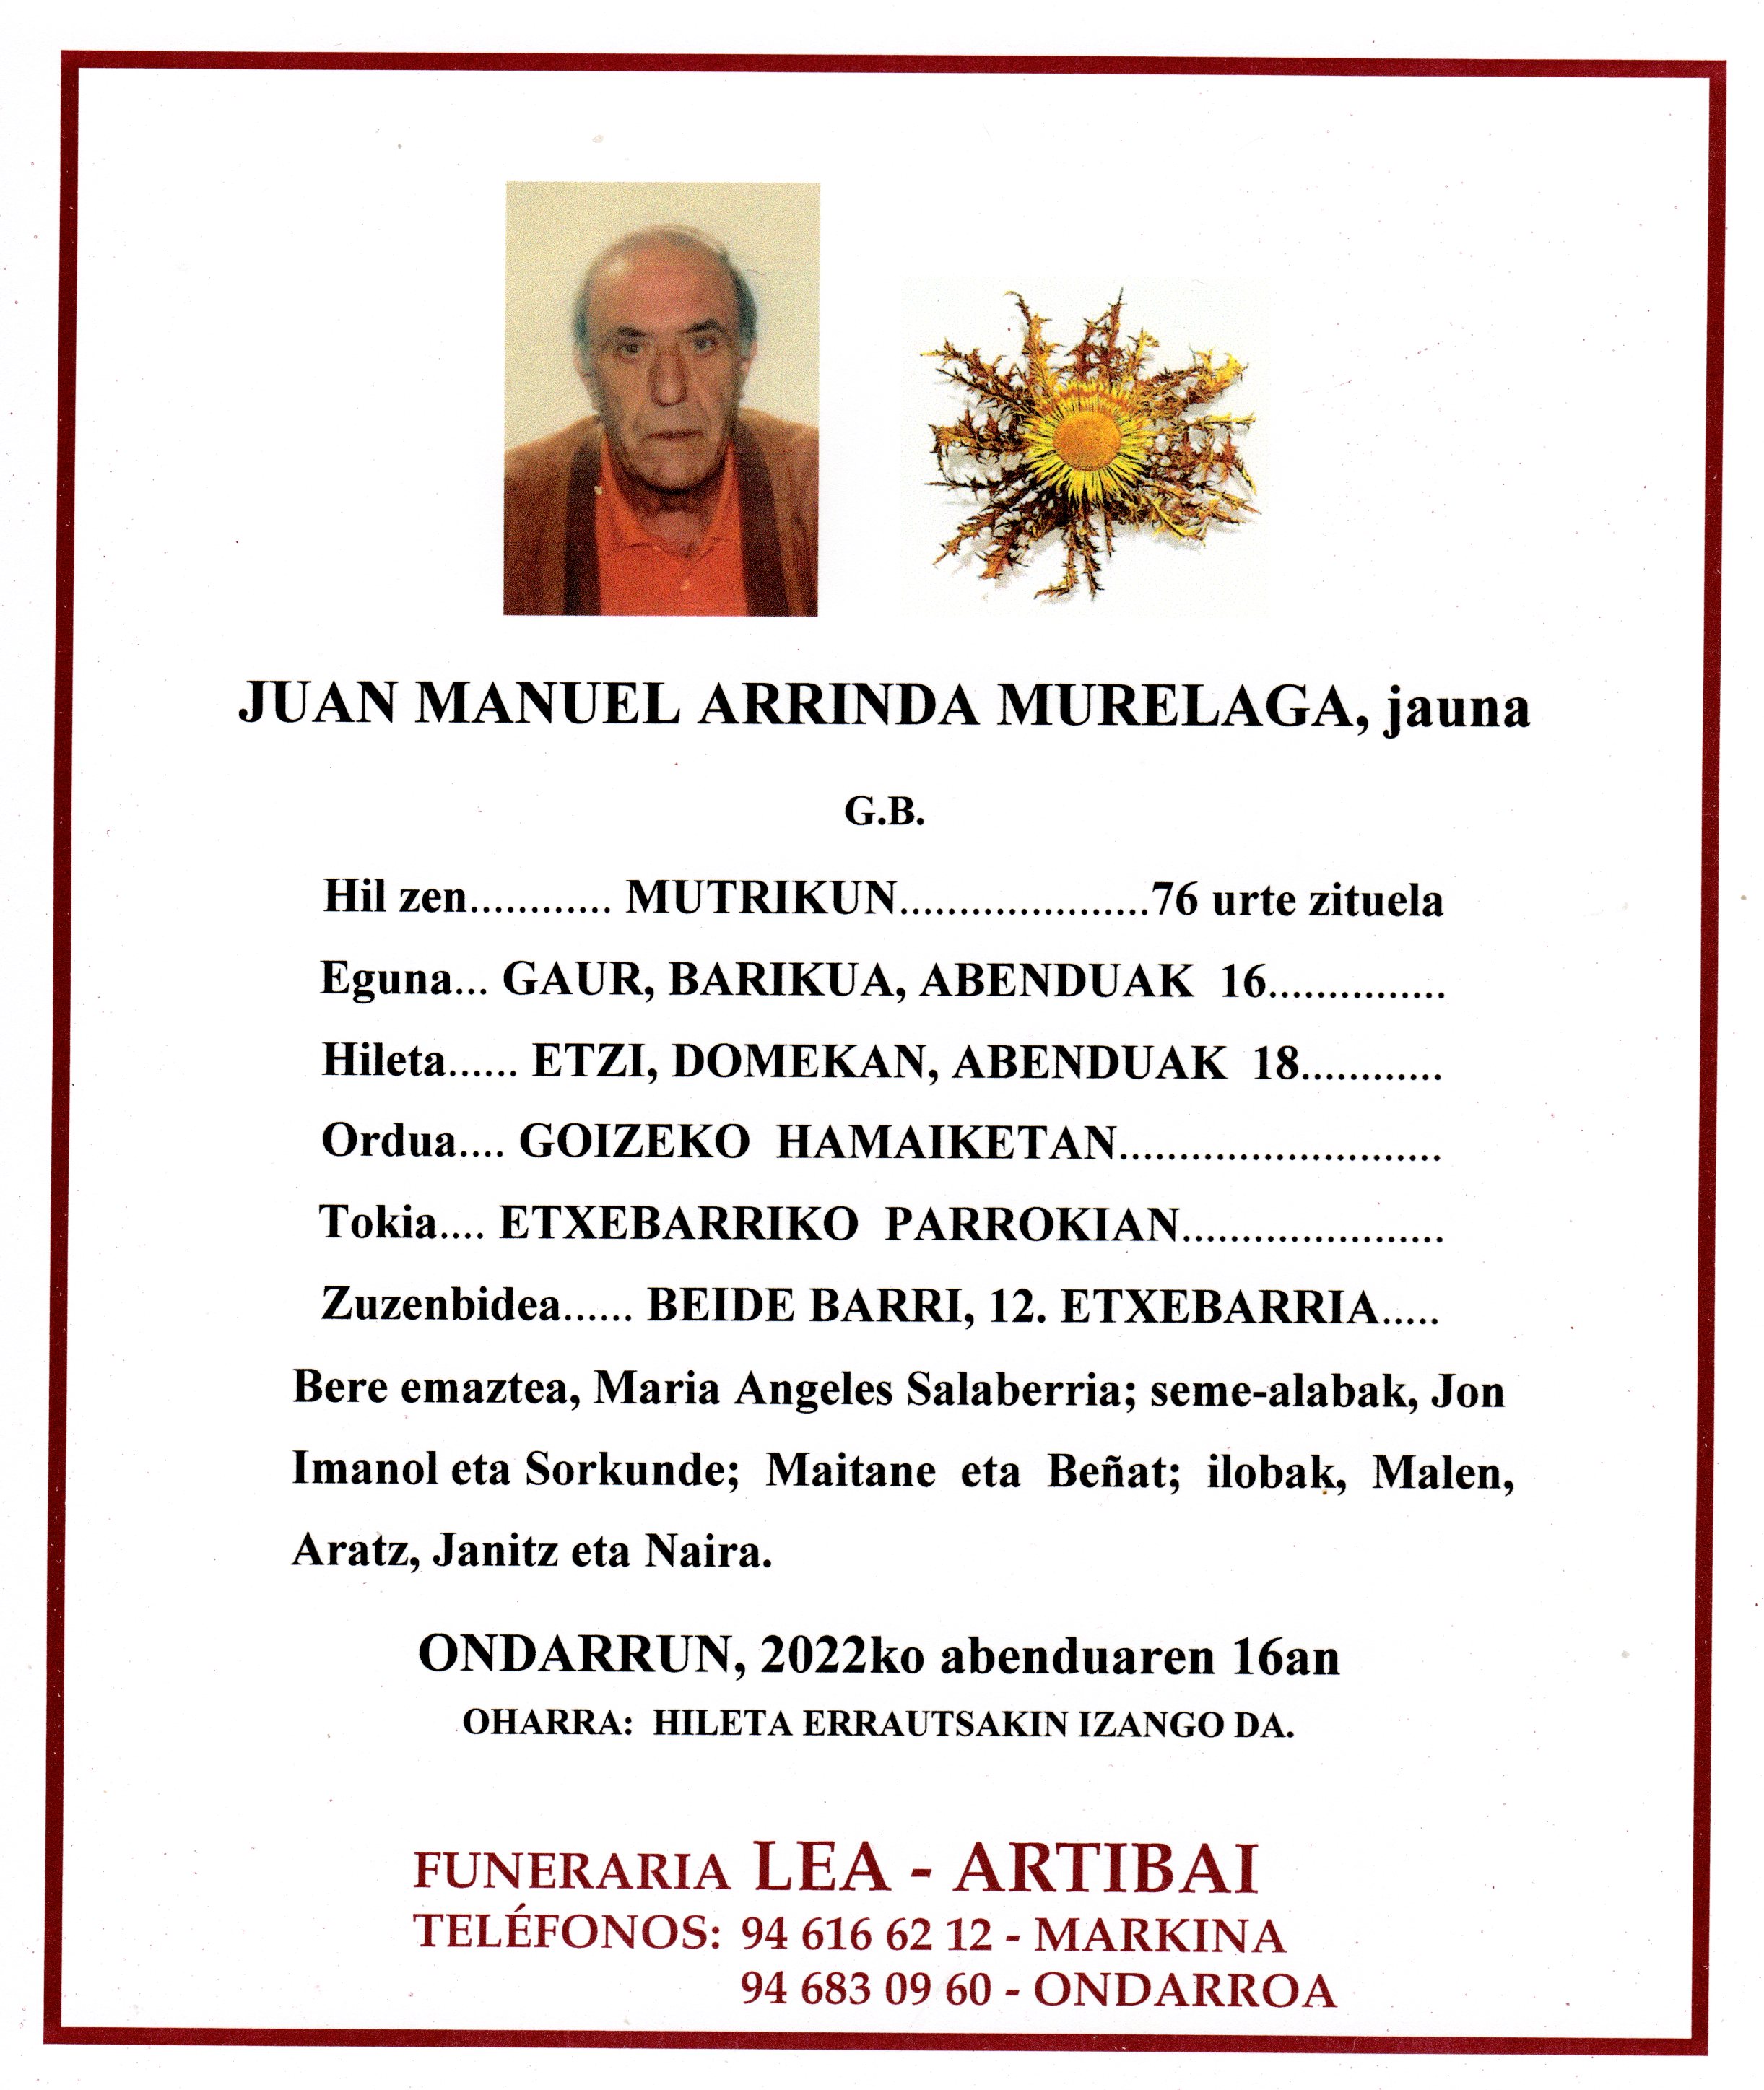 Juan Manuel Arrinda Murelaga